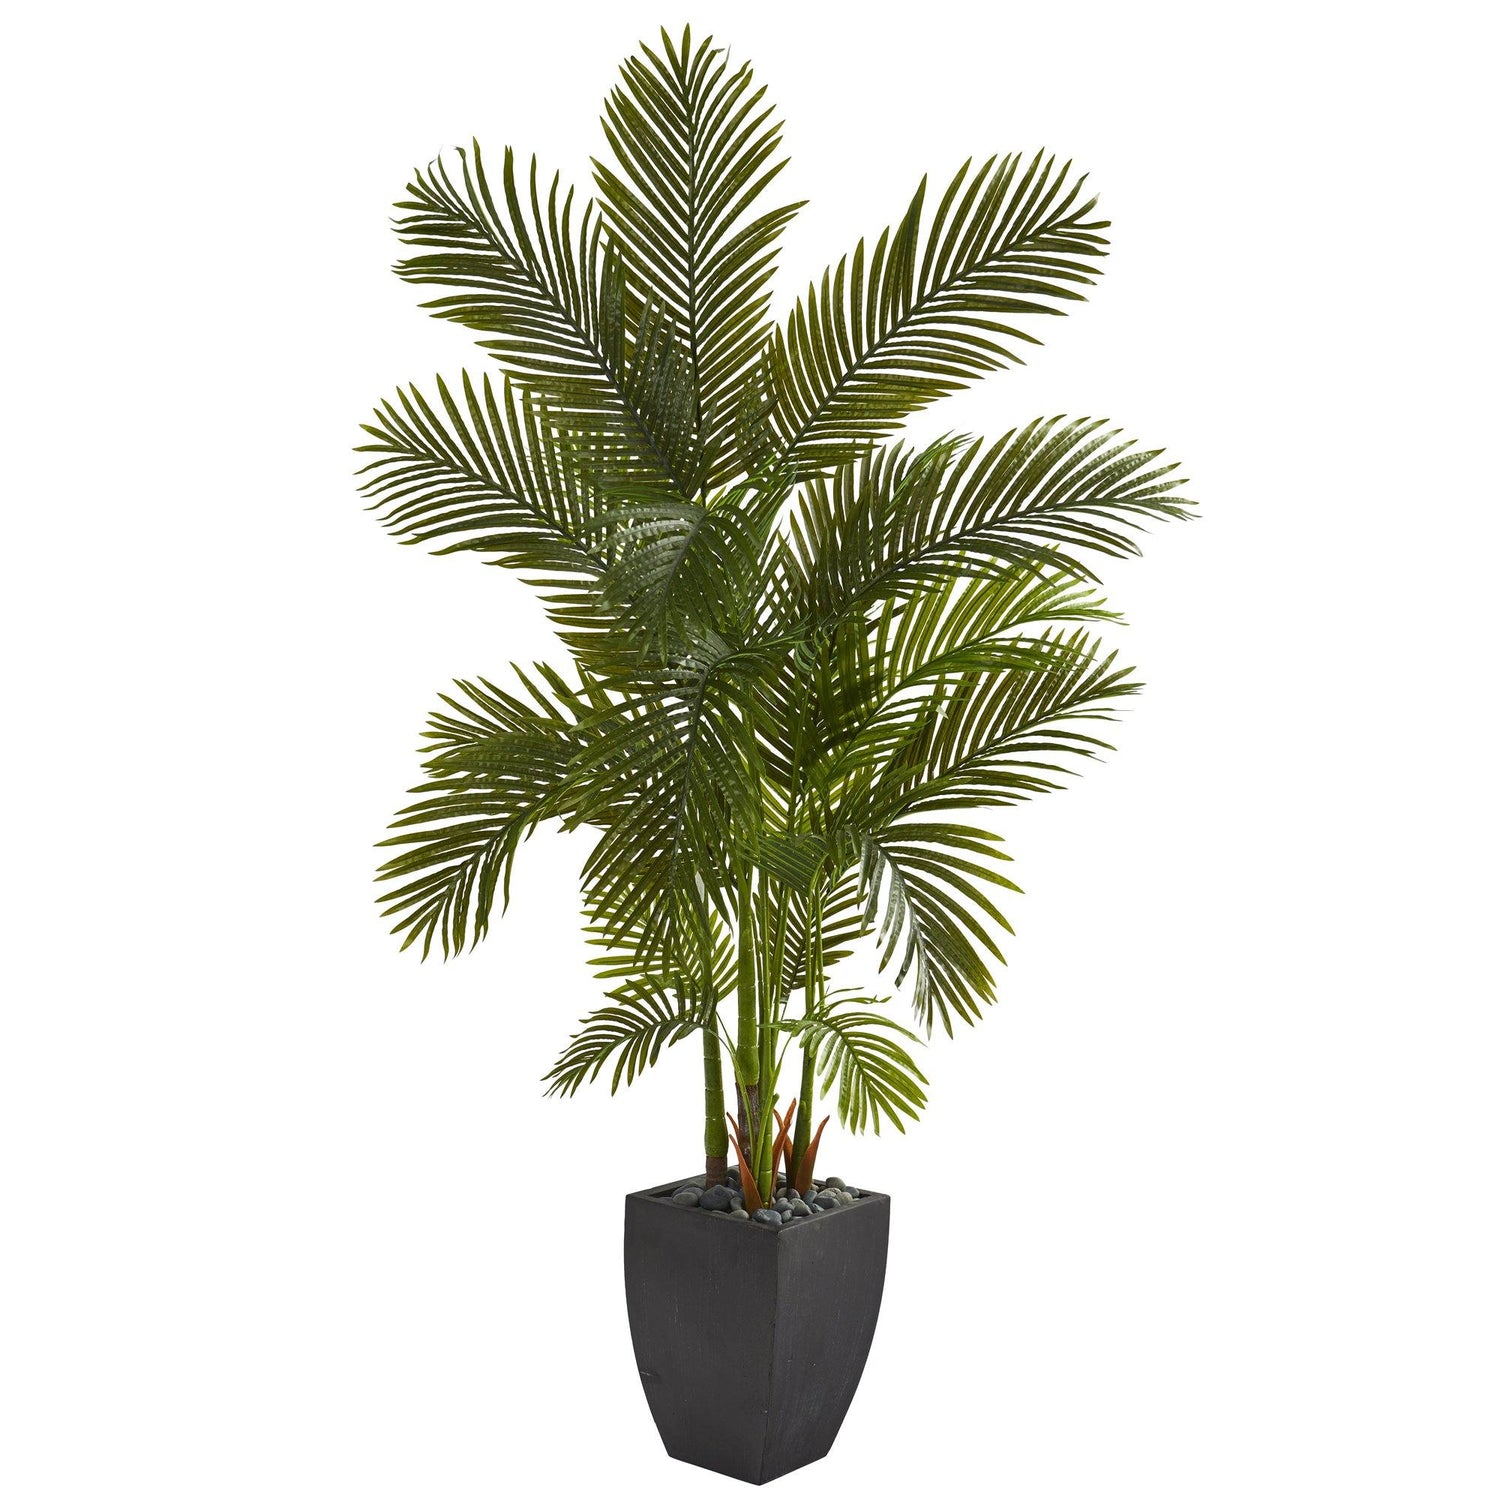 70” Areca Palm Artificial Tree in Black Planter